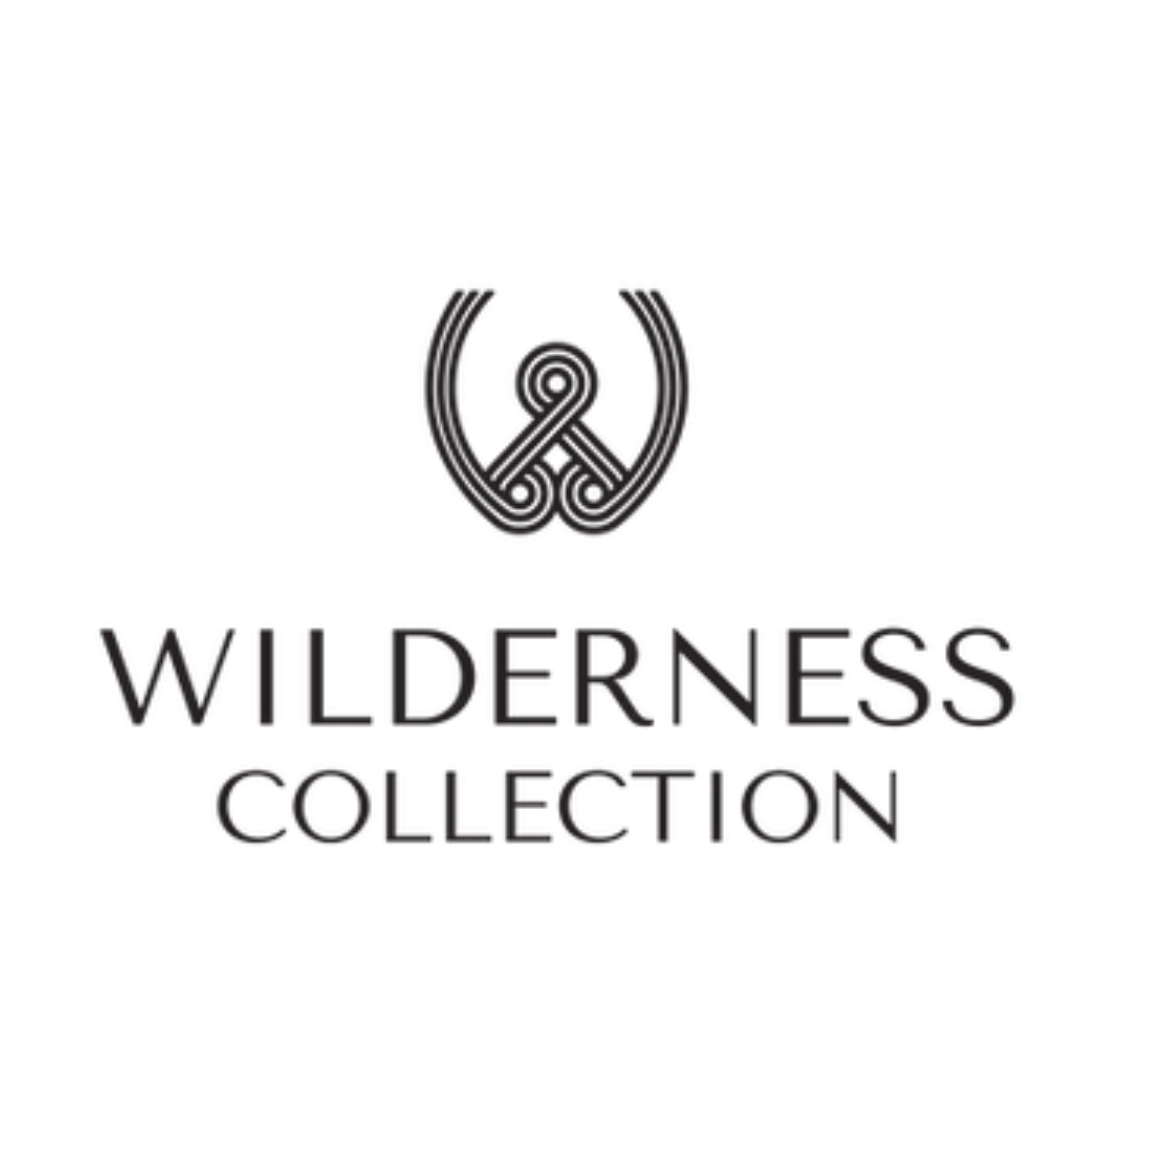 Wilderness Collection, Ngorongoro, Tanzania